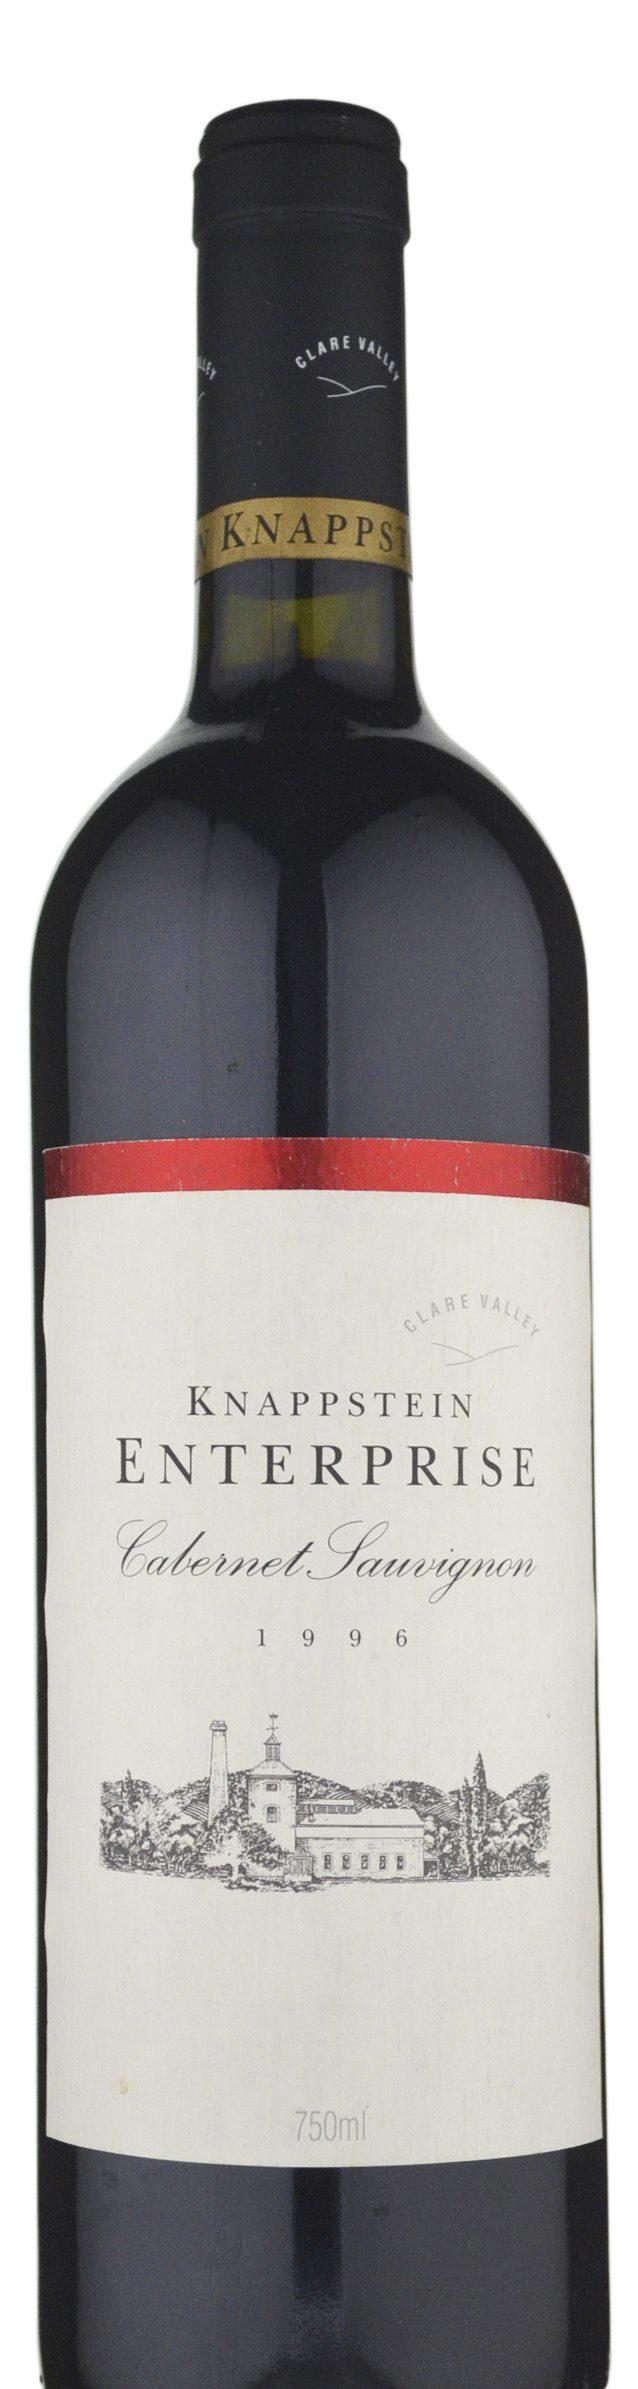 Knappstein Enterprise Cabernet Sauvignon 1996